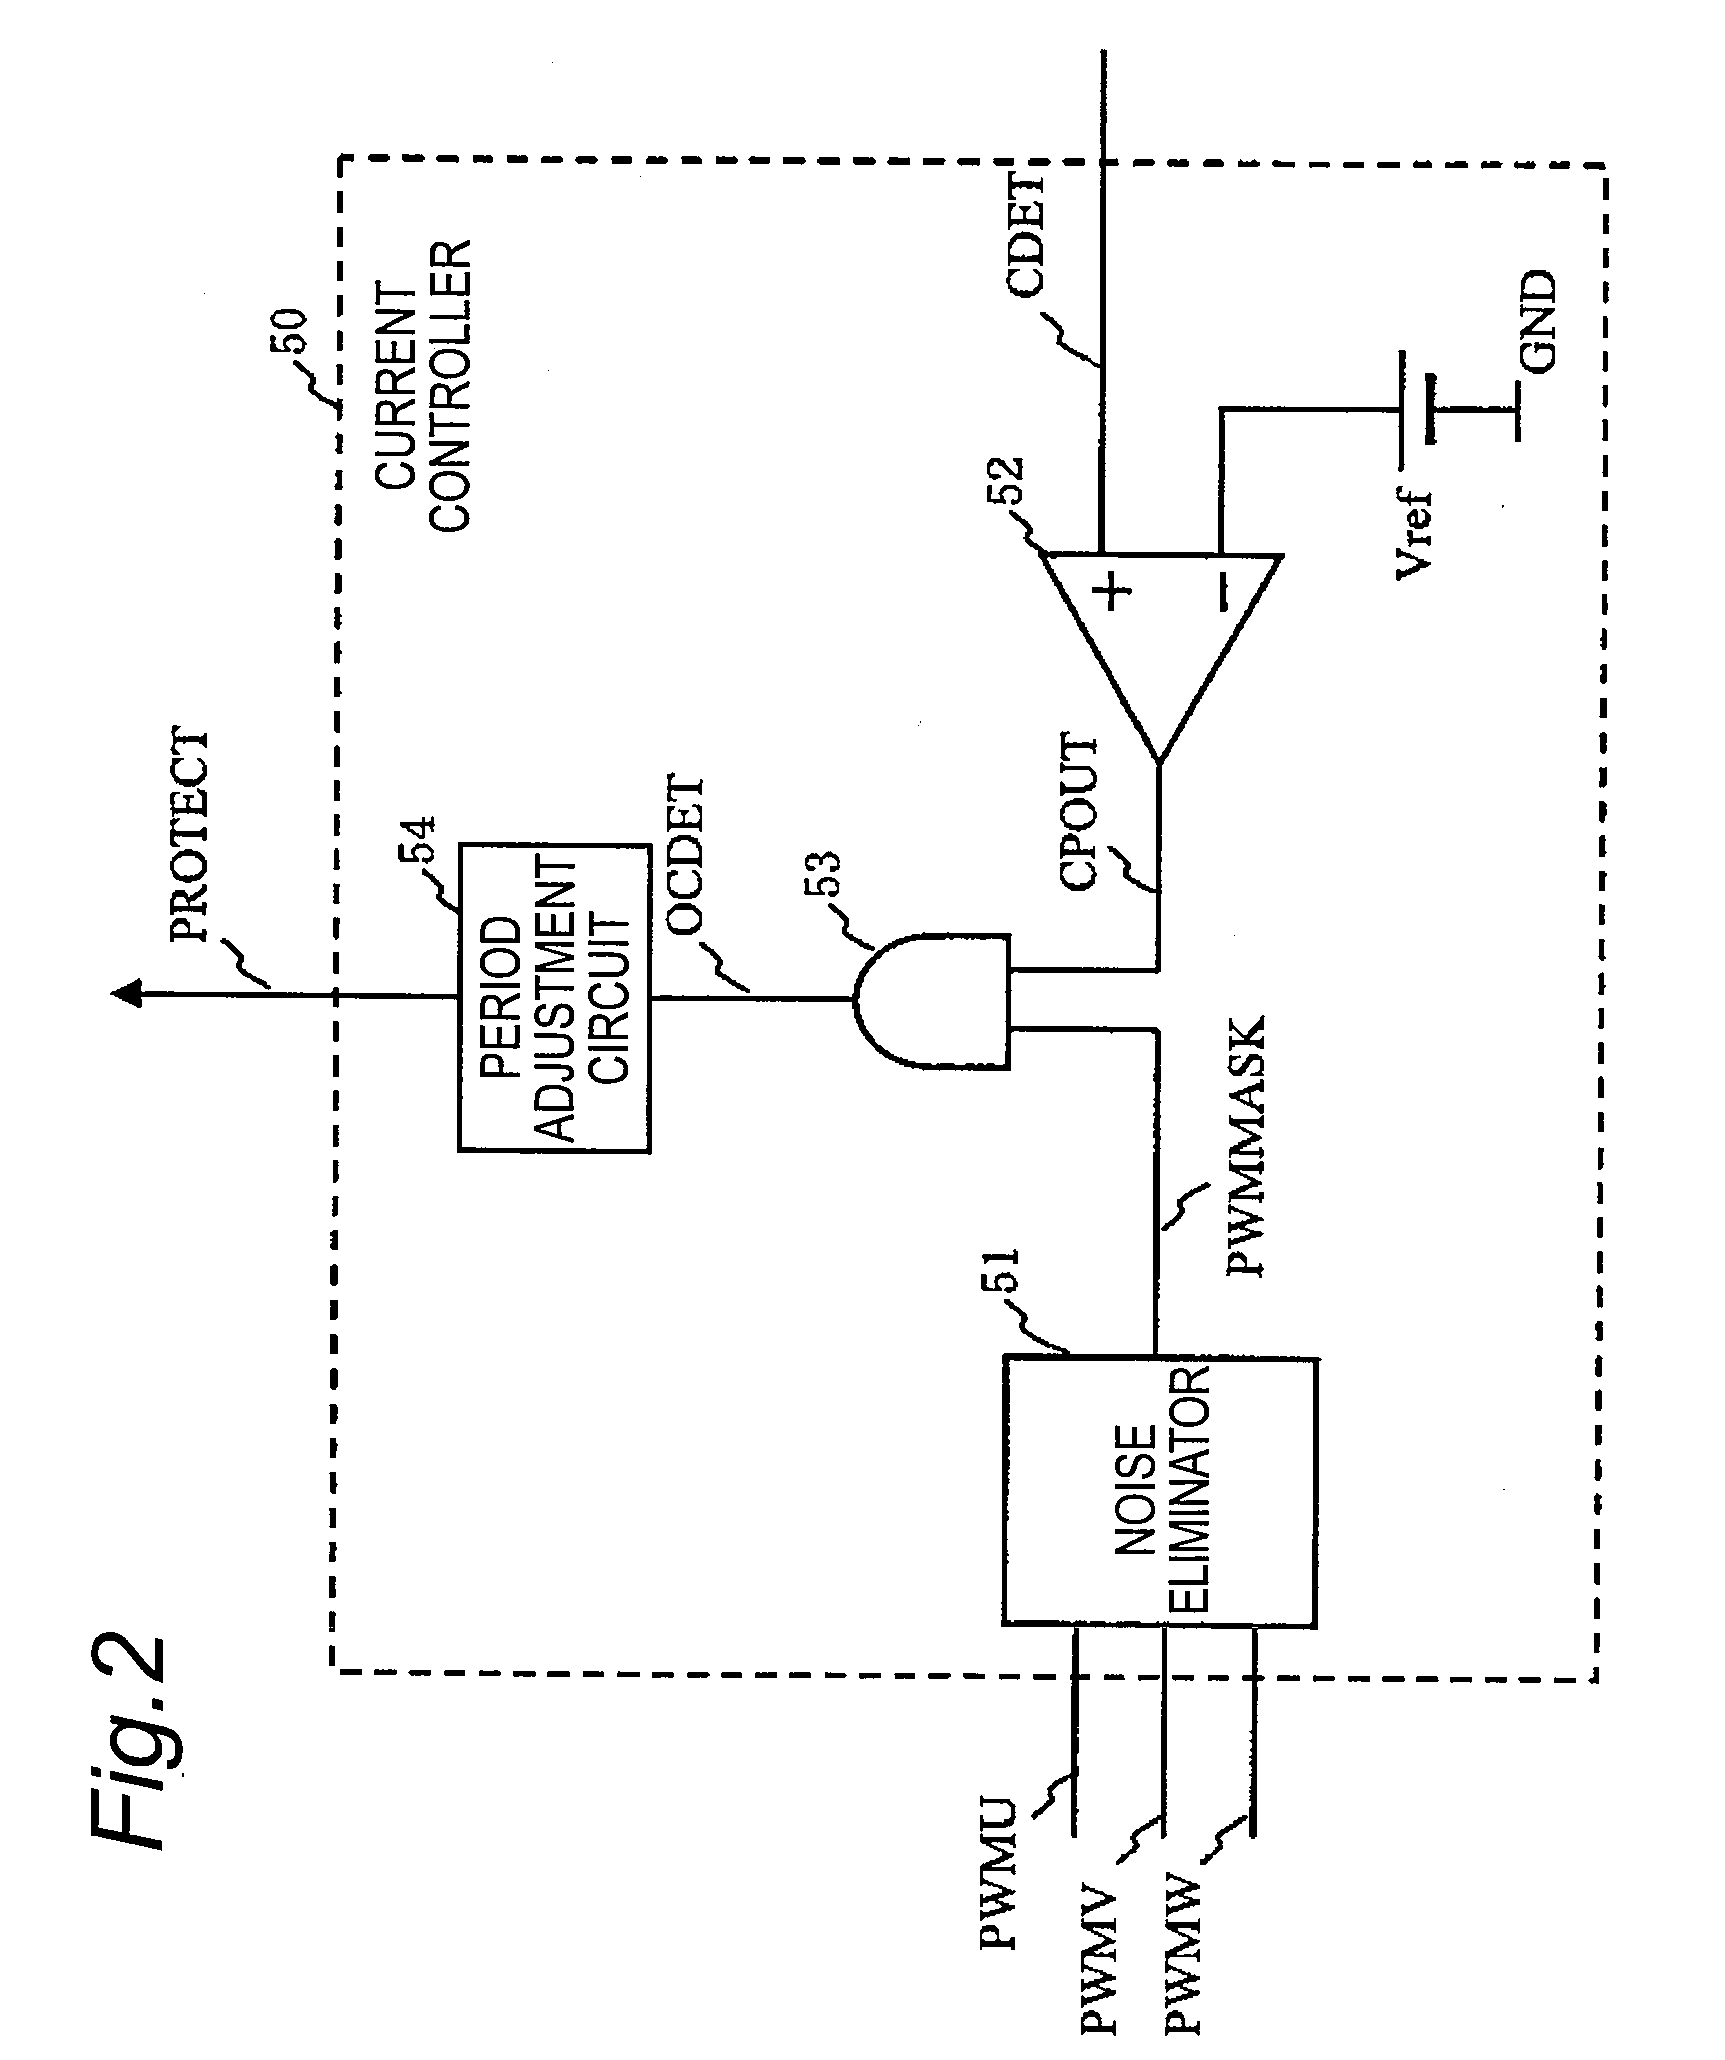 Motor drive apparatus and motor drive method